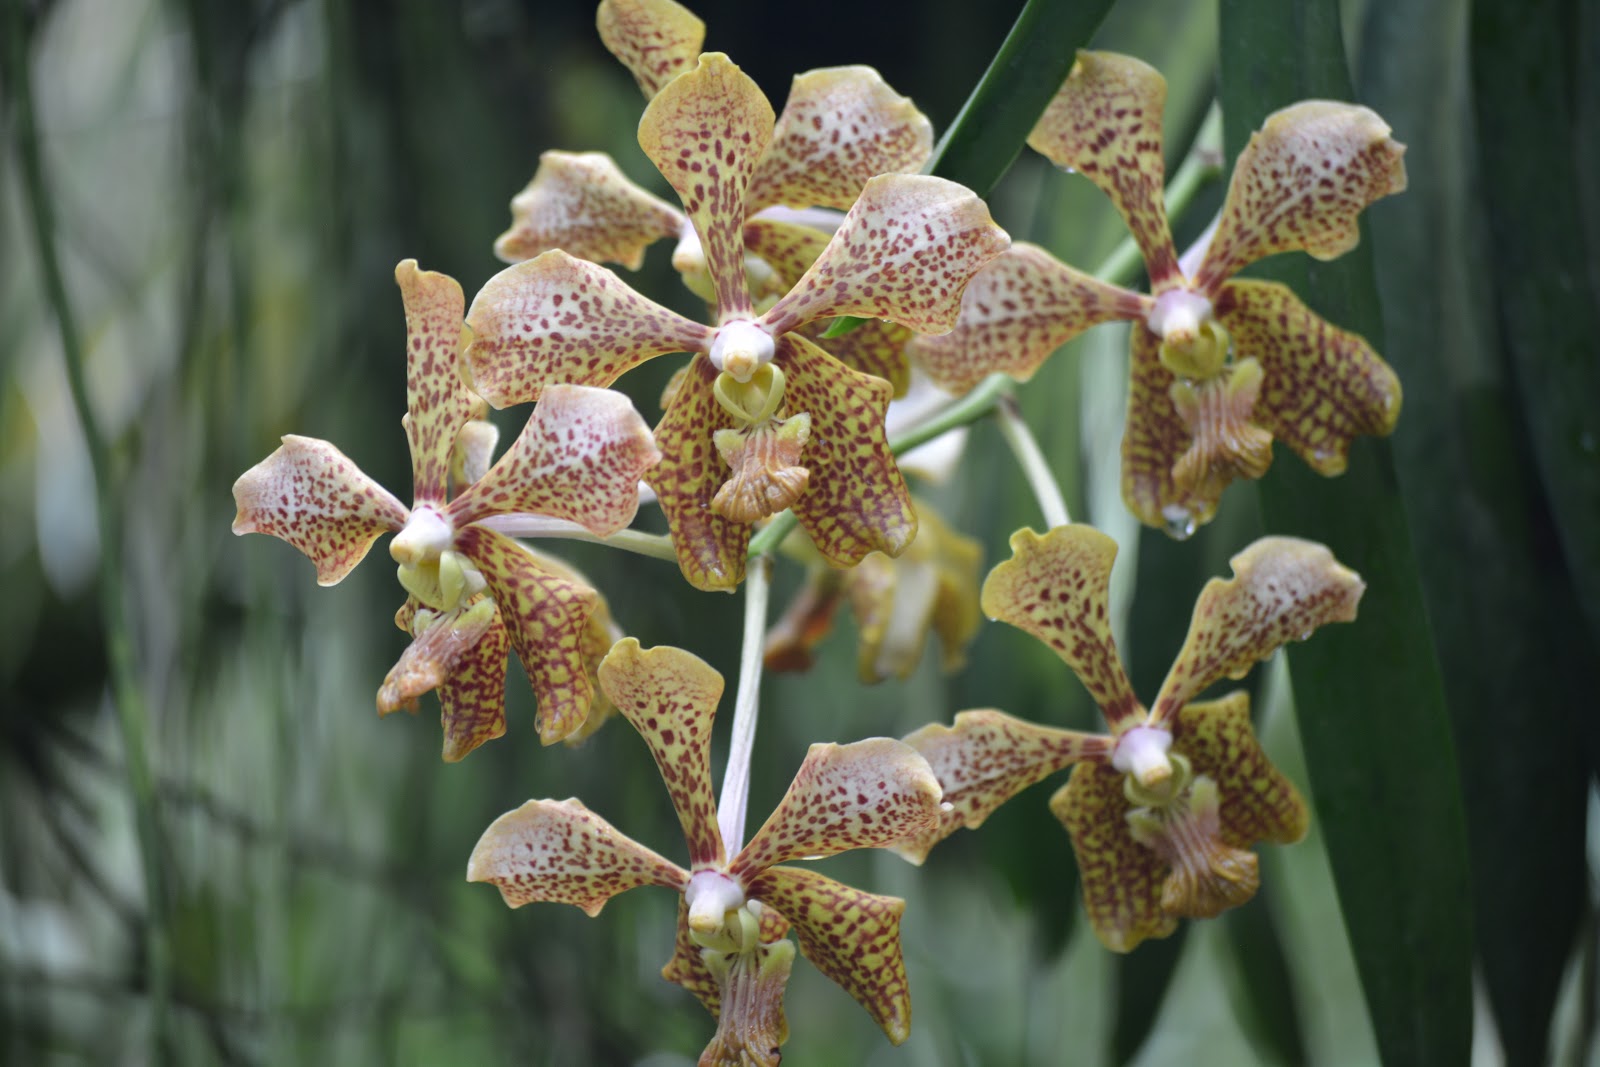  Anggrek  Orchid sp Dendrobium sp